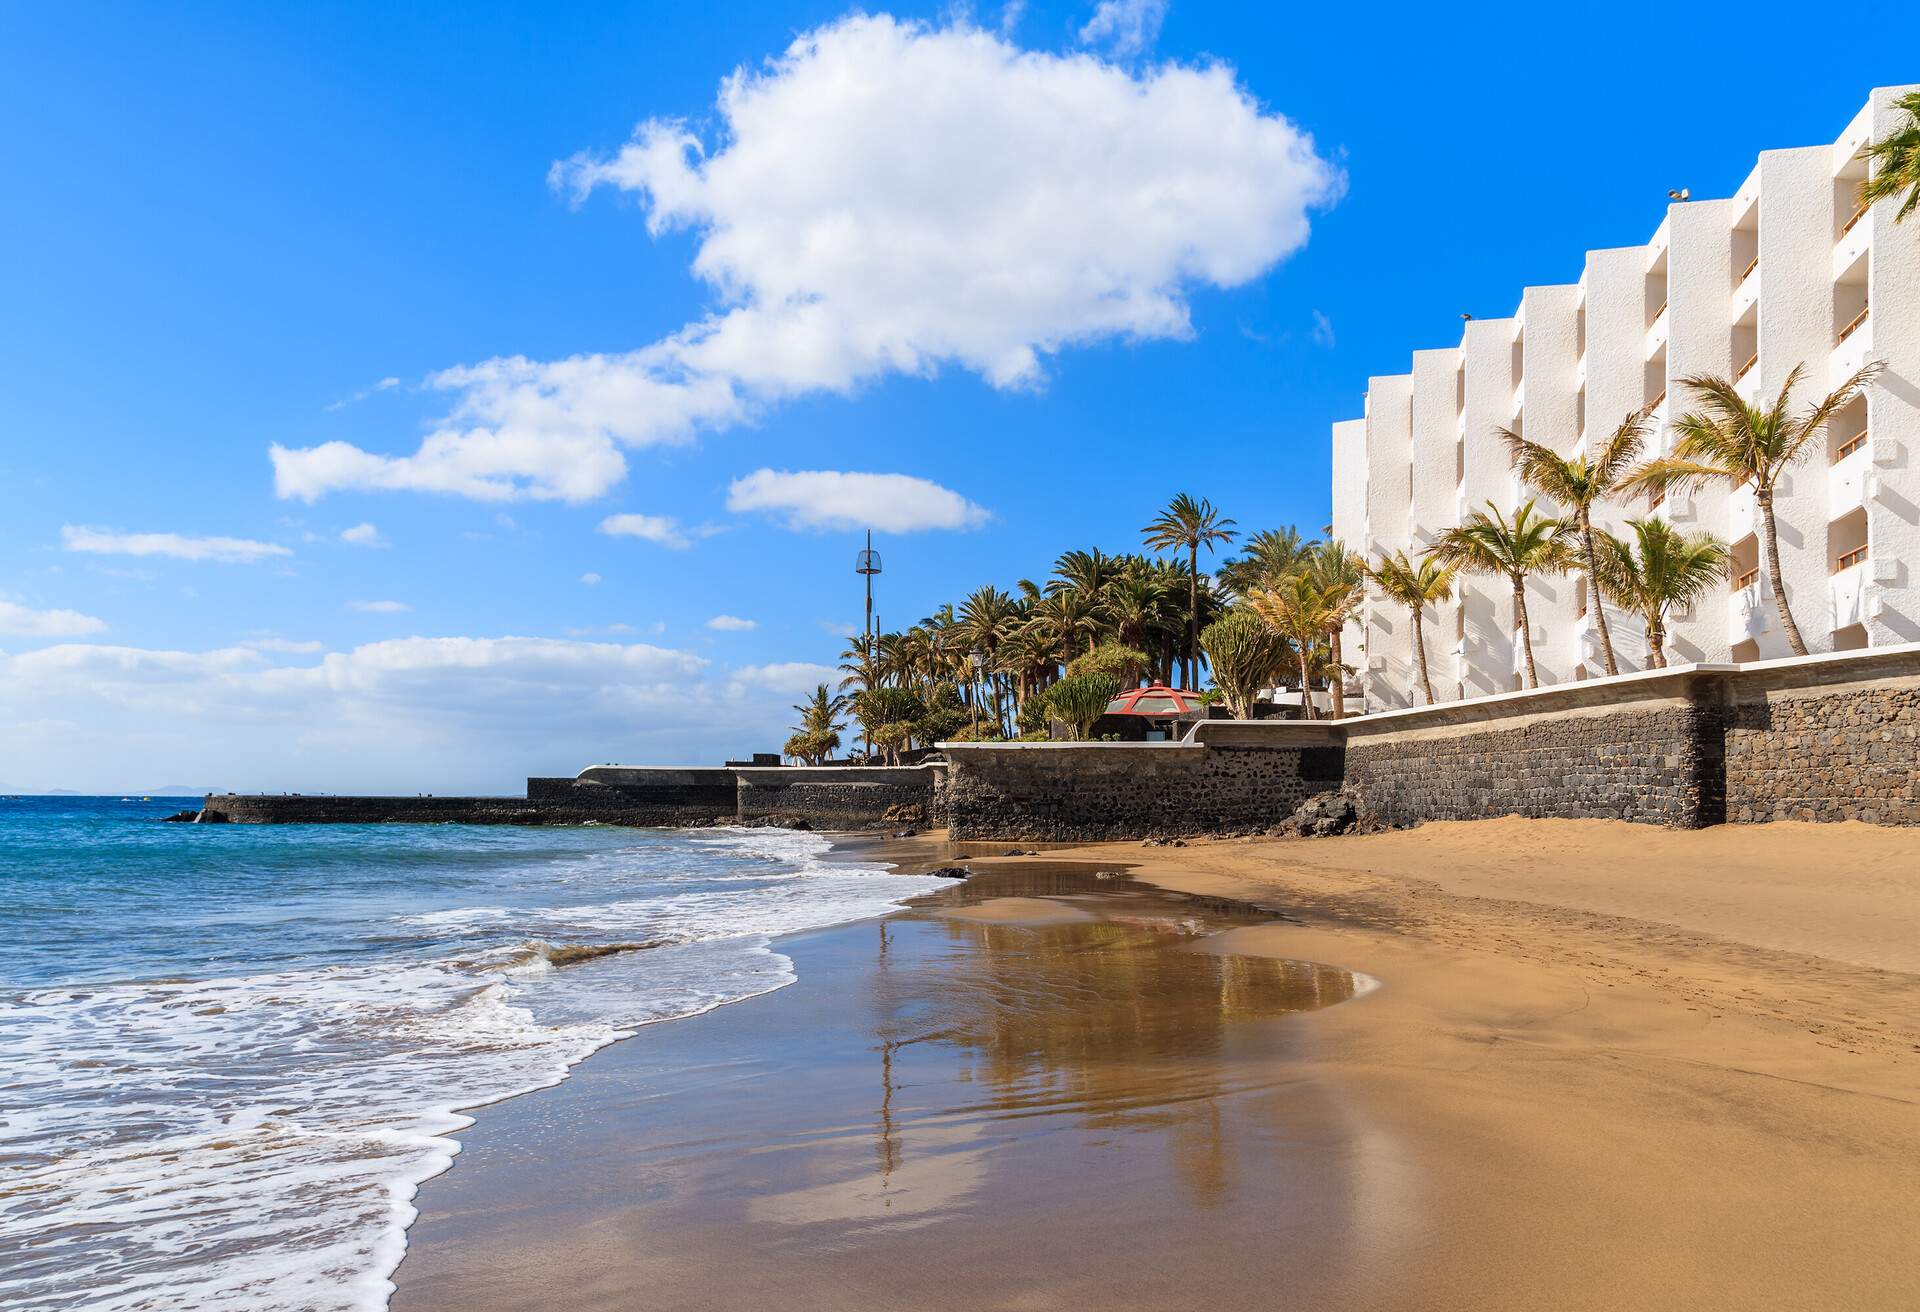 Ocean wave of sandy tropical beach in Puerto del Carmen, Lanzarote, Canary Islands, Spain; Shutterstock ID 246026494